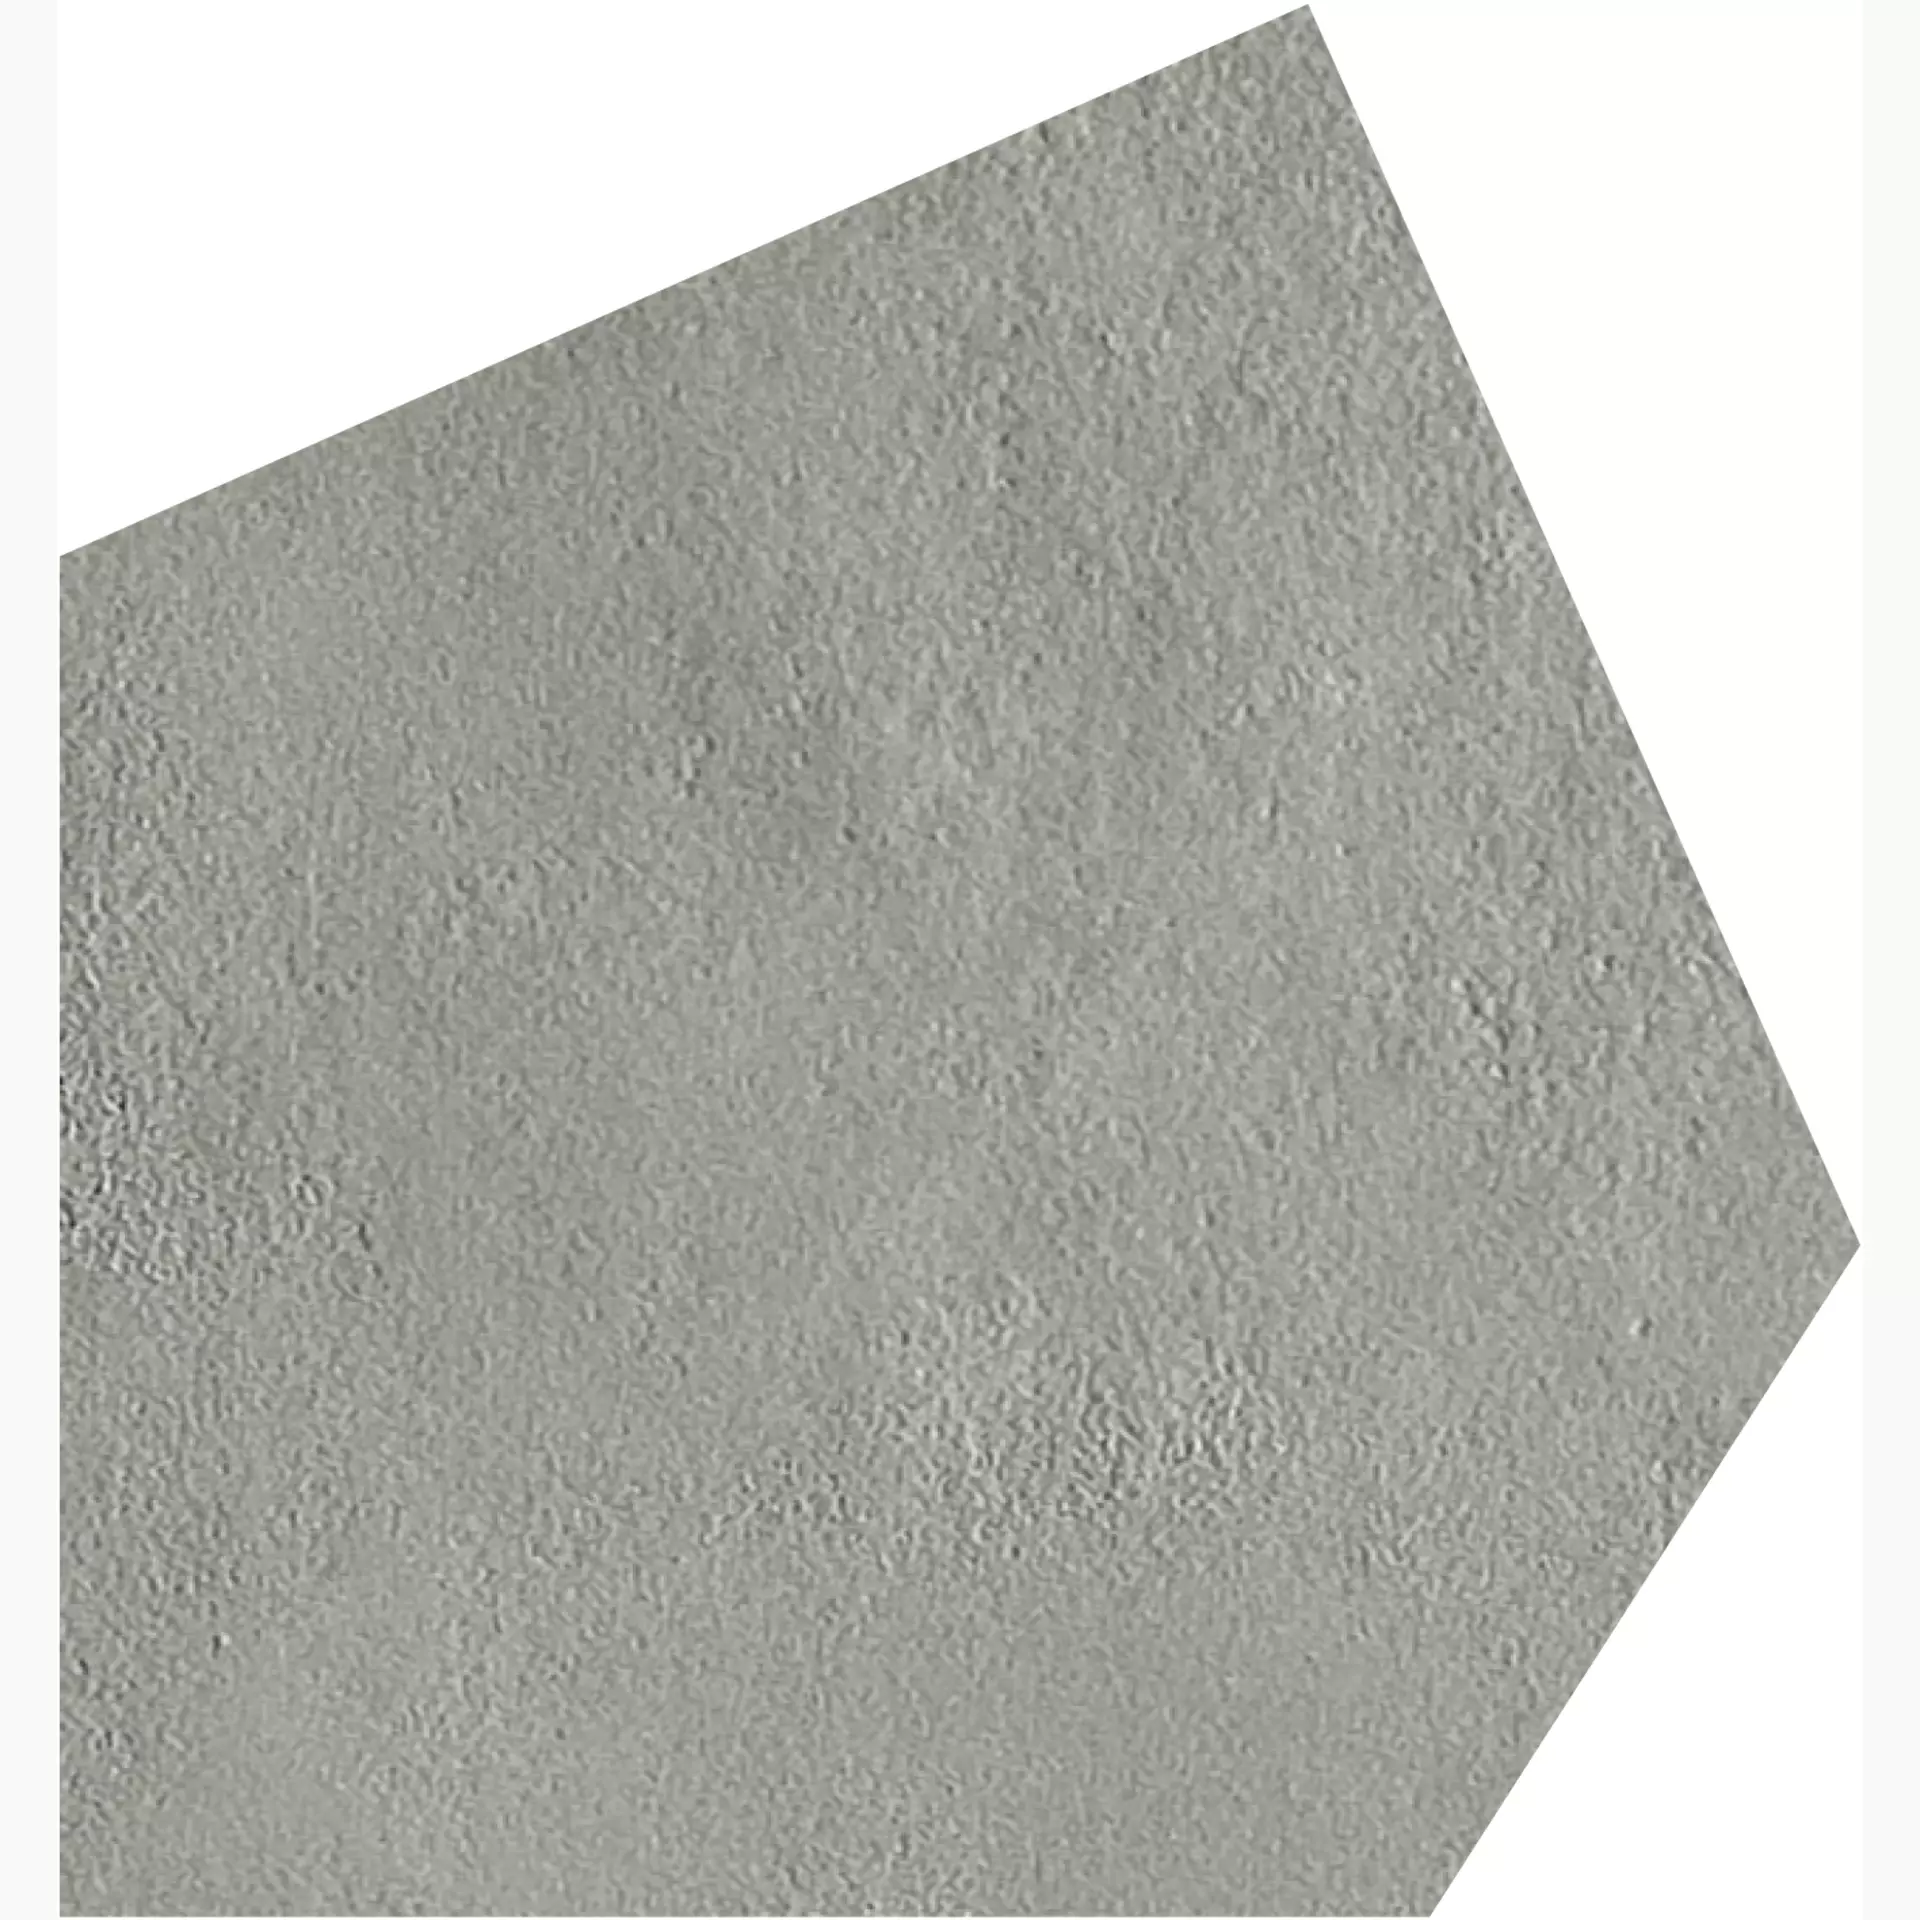 Gigacer Argilla Dry Material Decor Small Pentagon 6ARGPENTSDRY 10x17cm 6mm